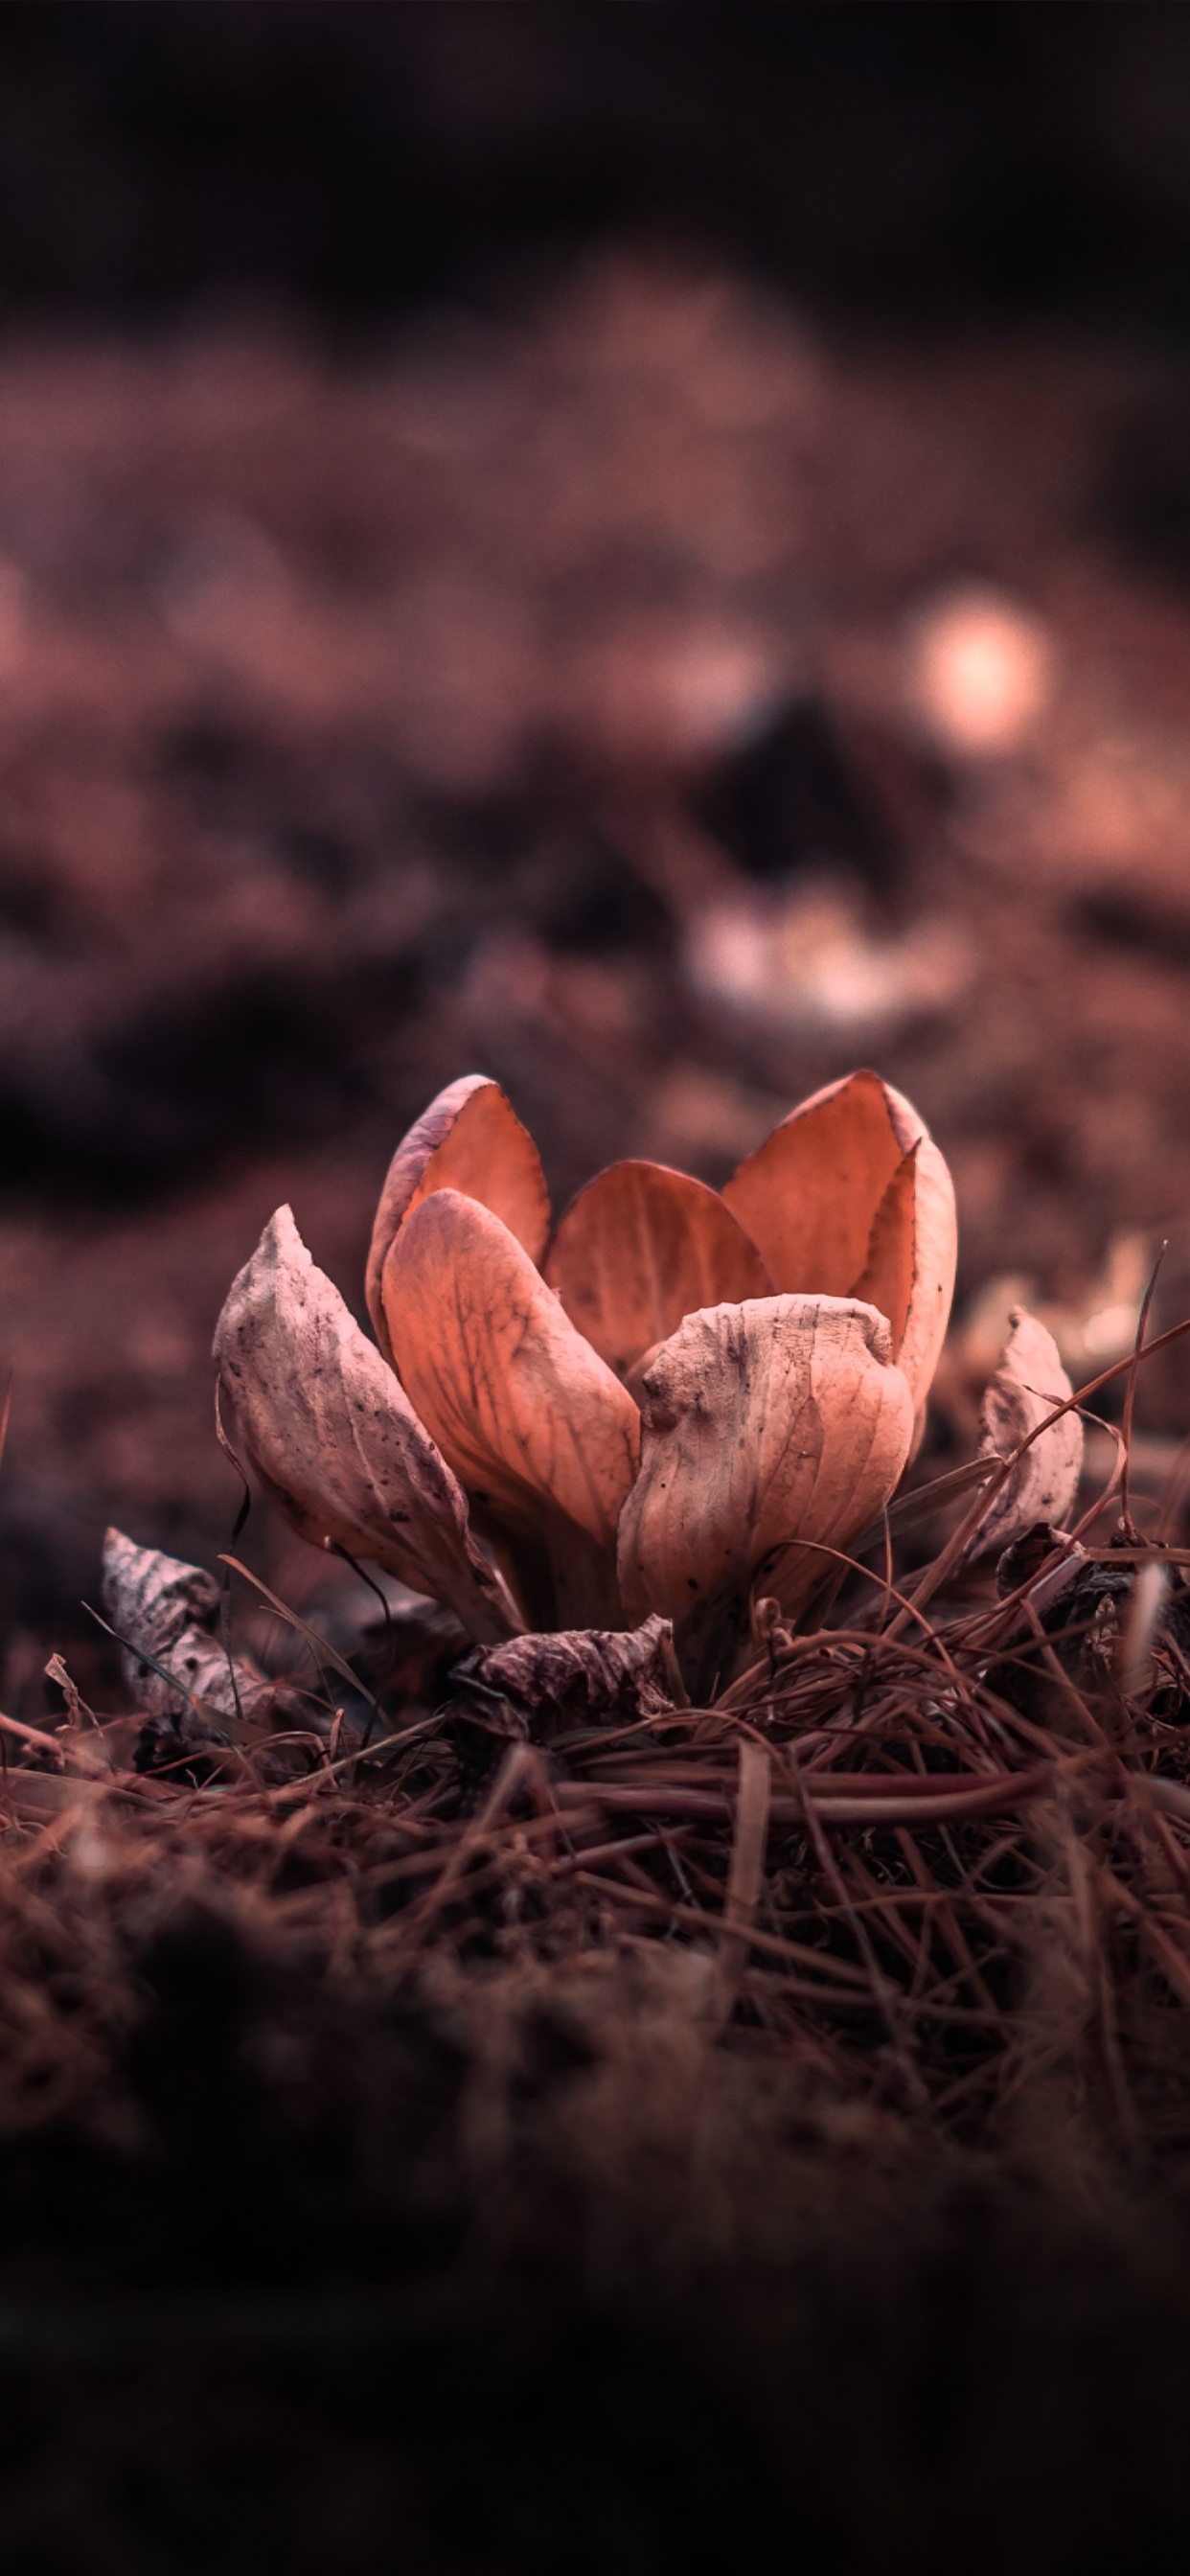 Brown Mushrooms on Brown Dried Leaves. Wallpaper in 1242x2688 Resolution